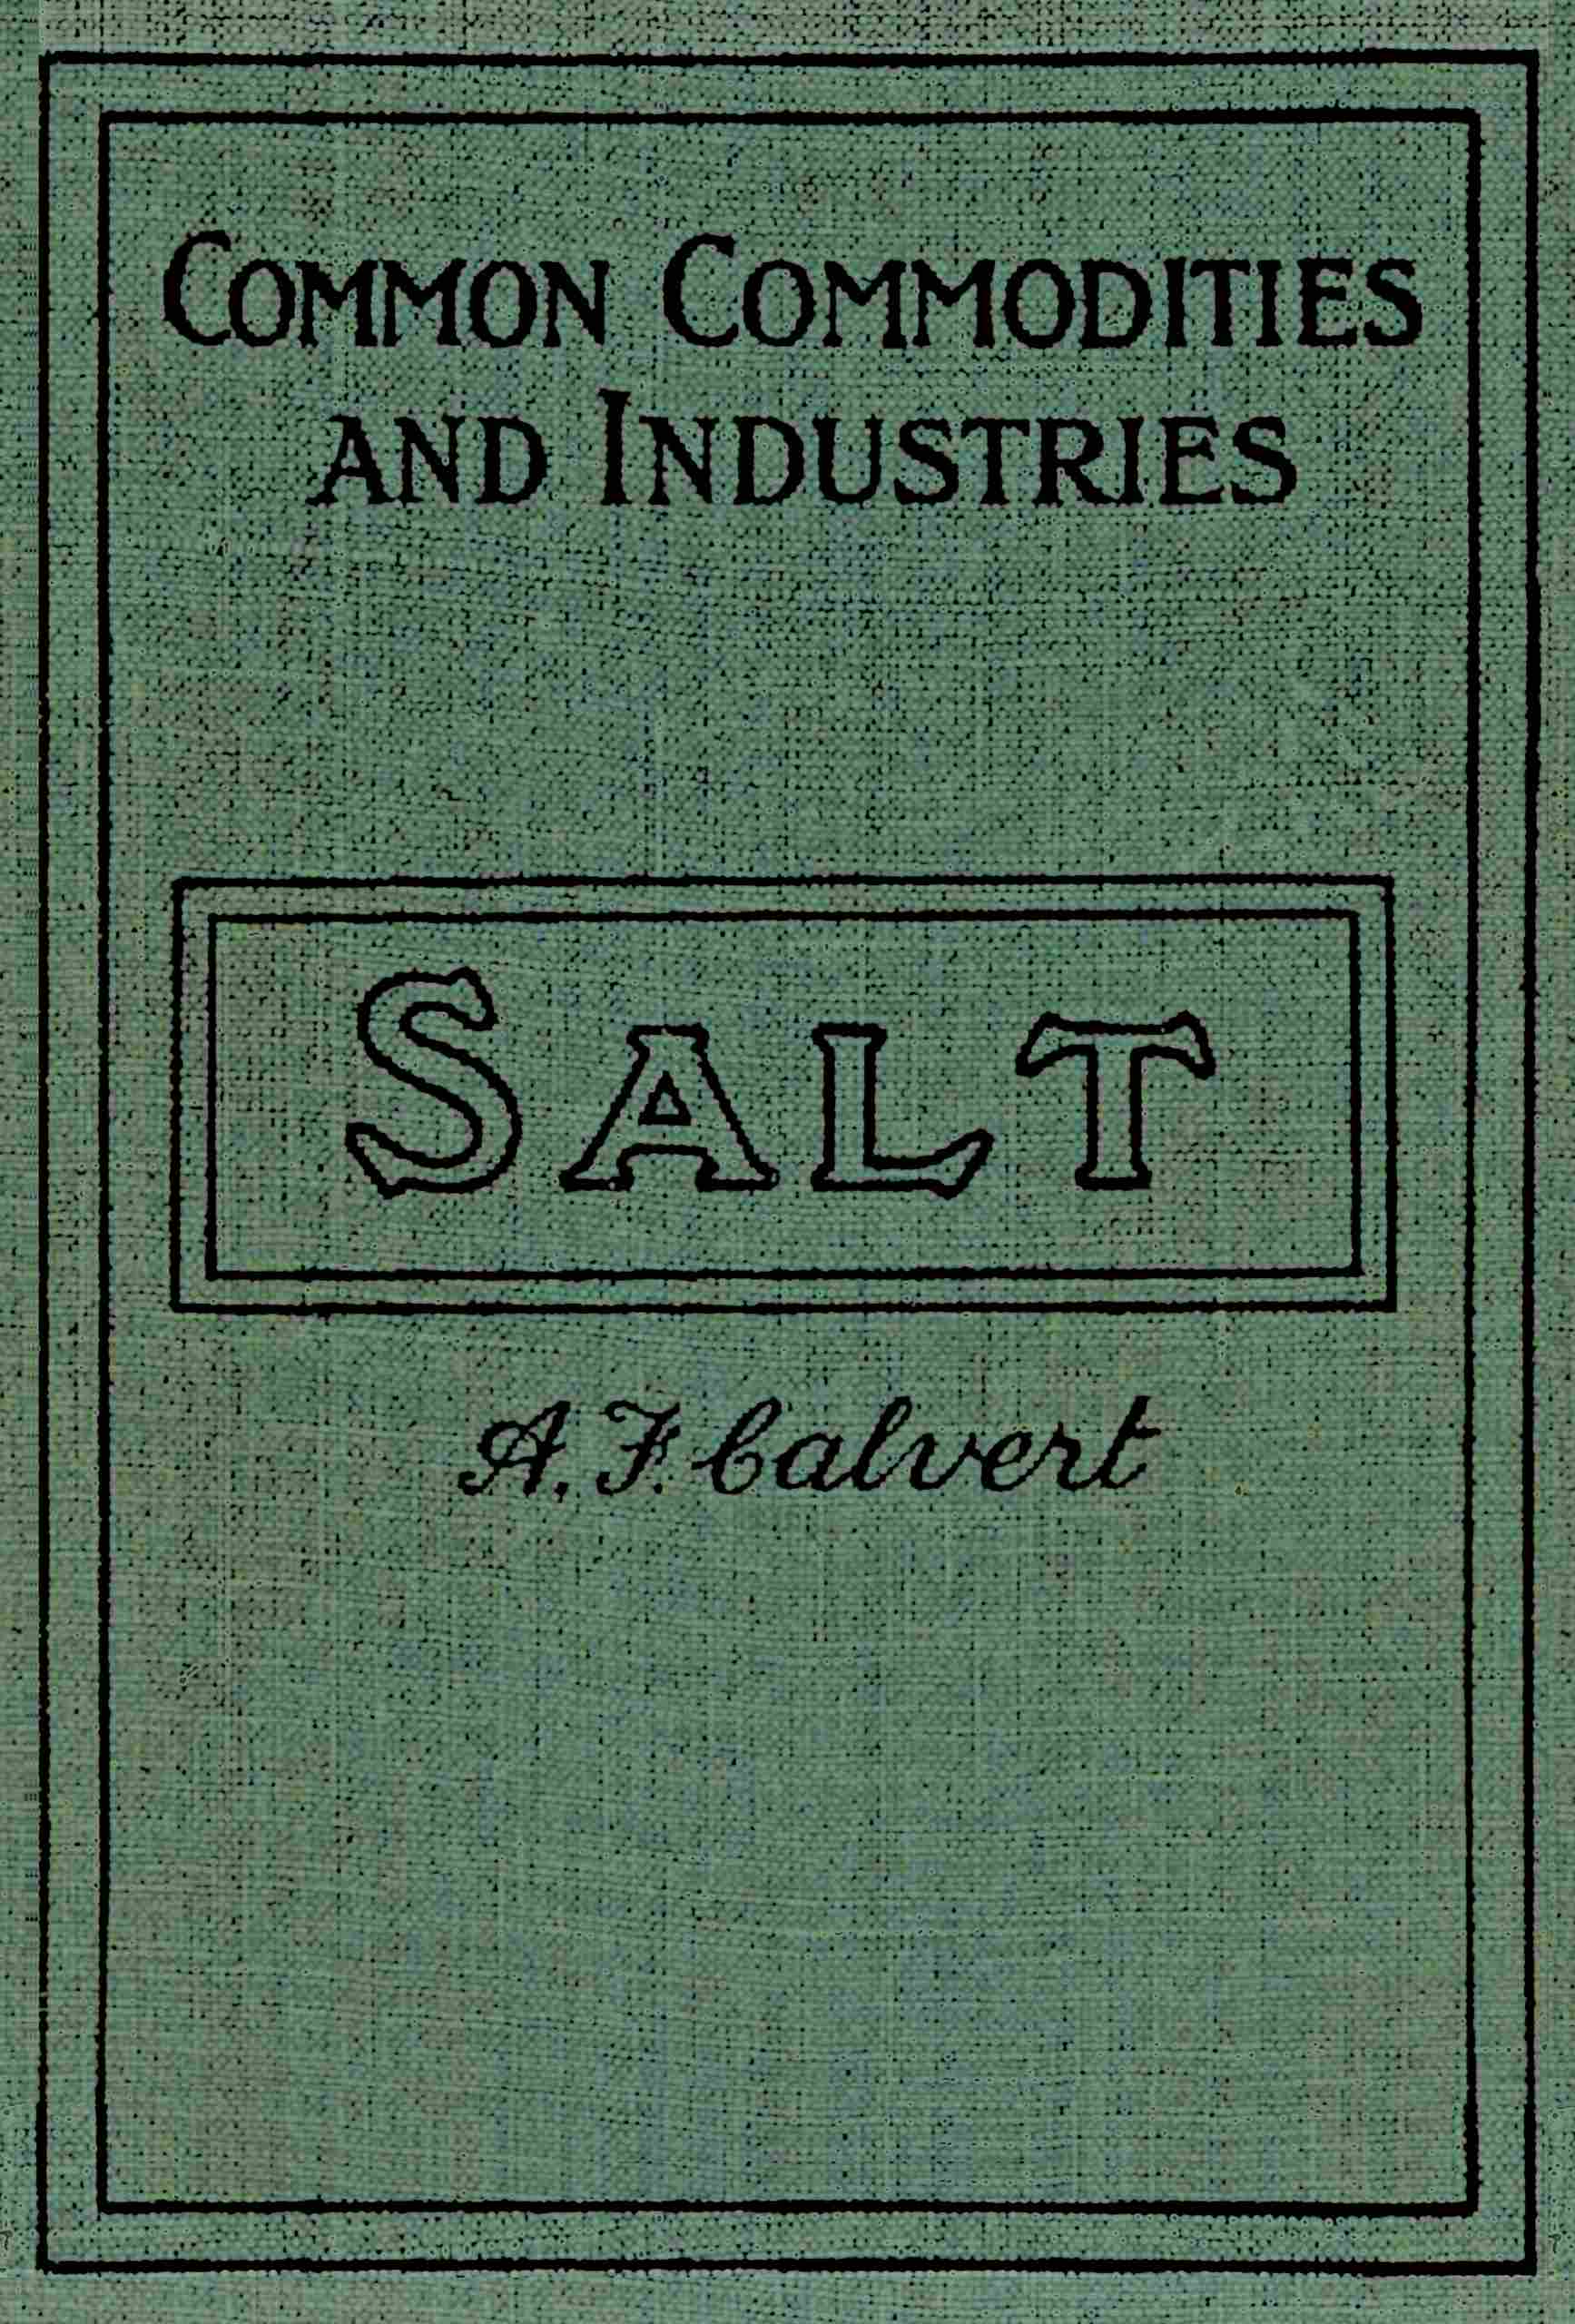 Salt and the salt industry